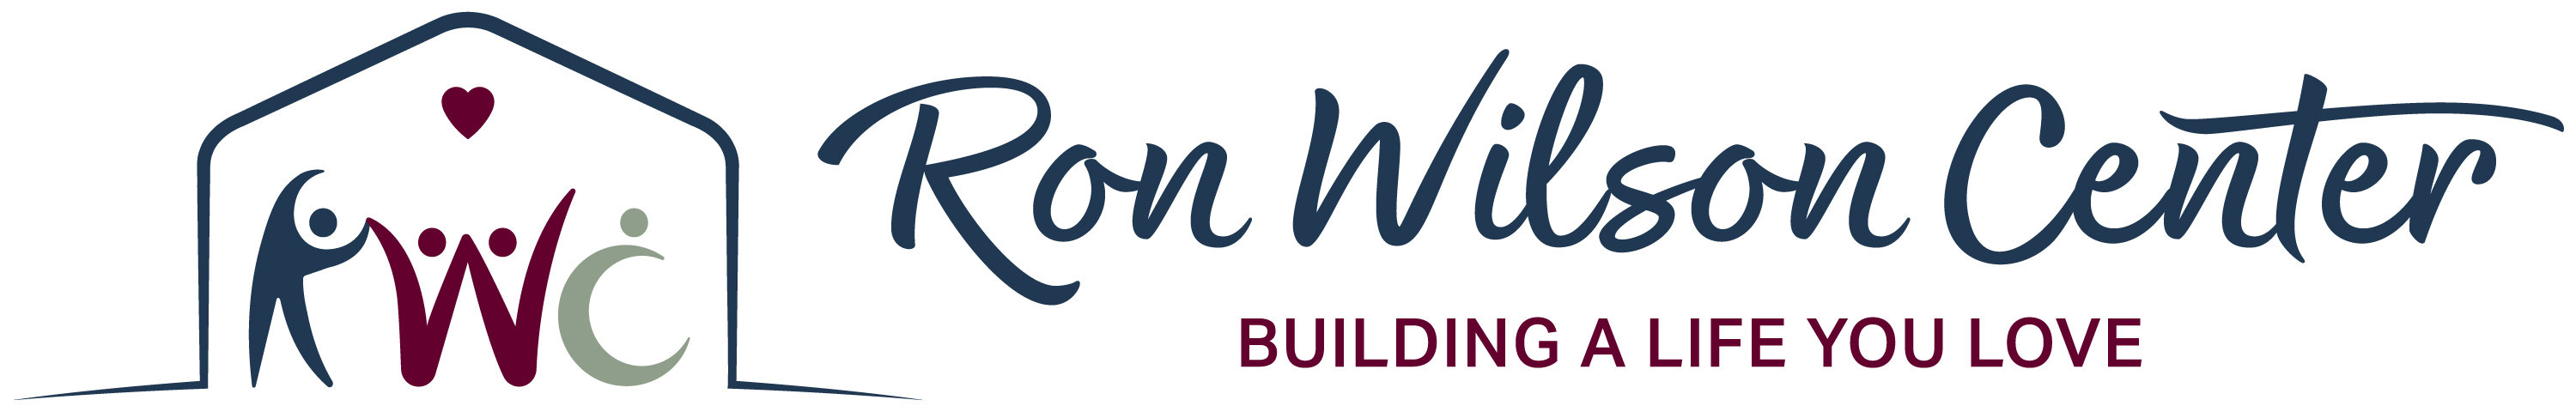 Ron Wilson Center for Effective Living, Inc. logo